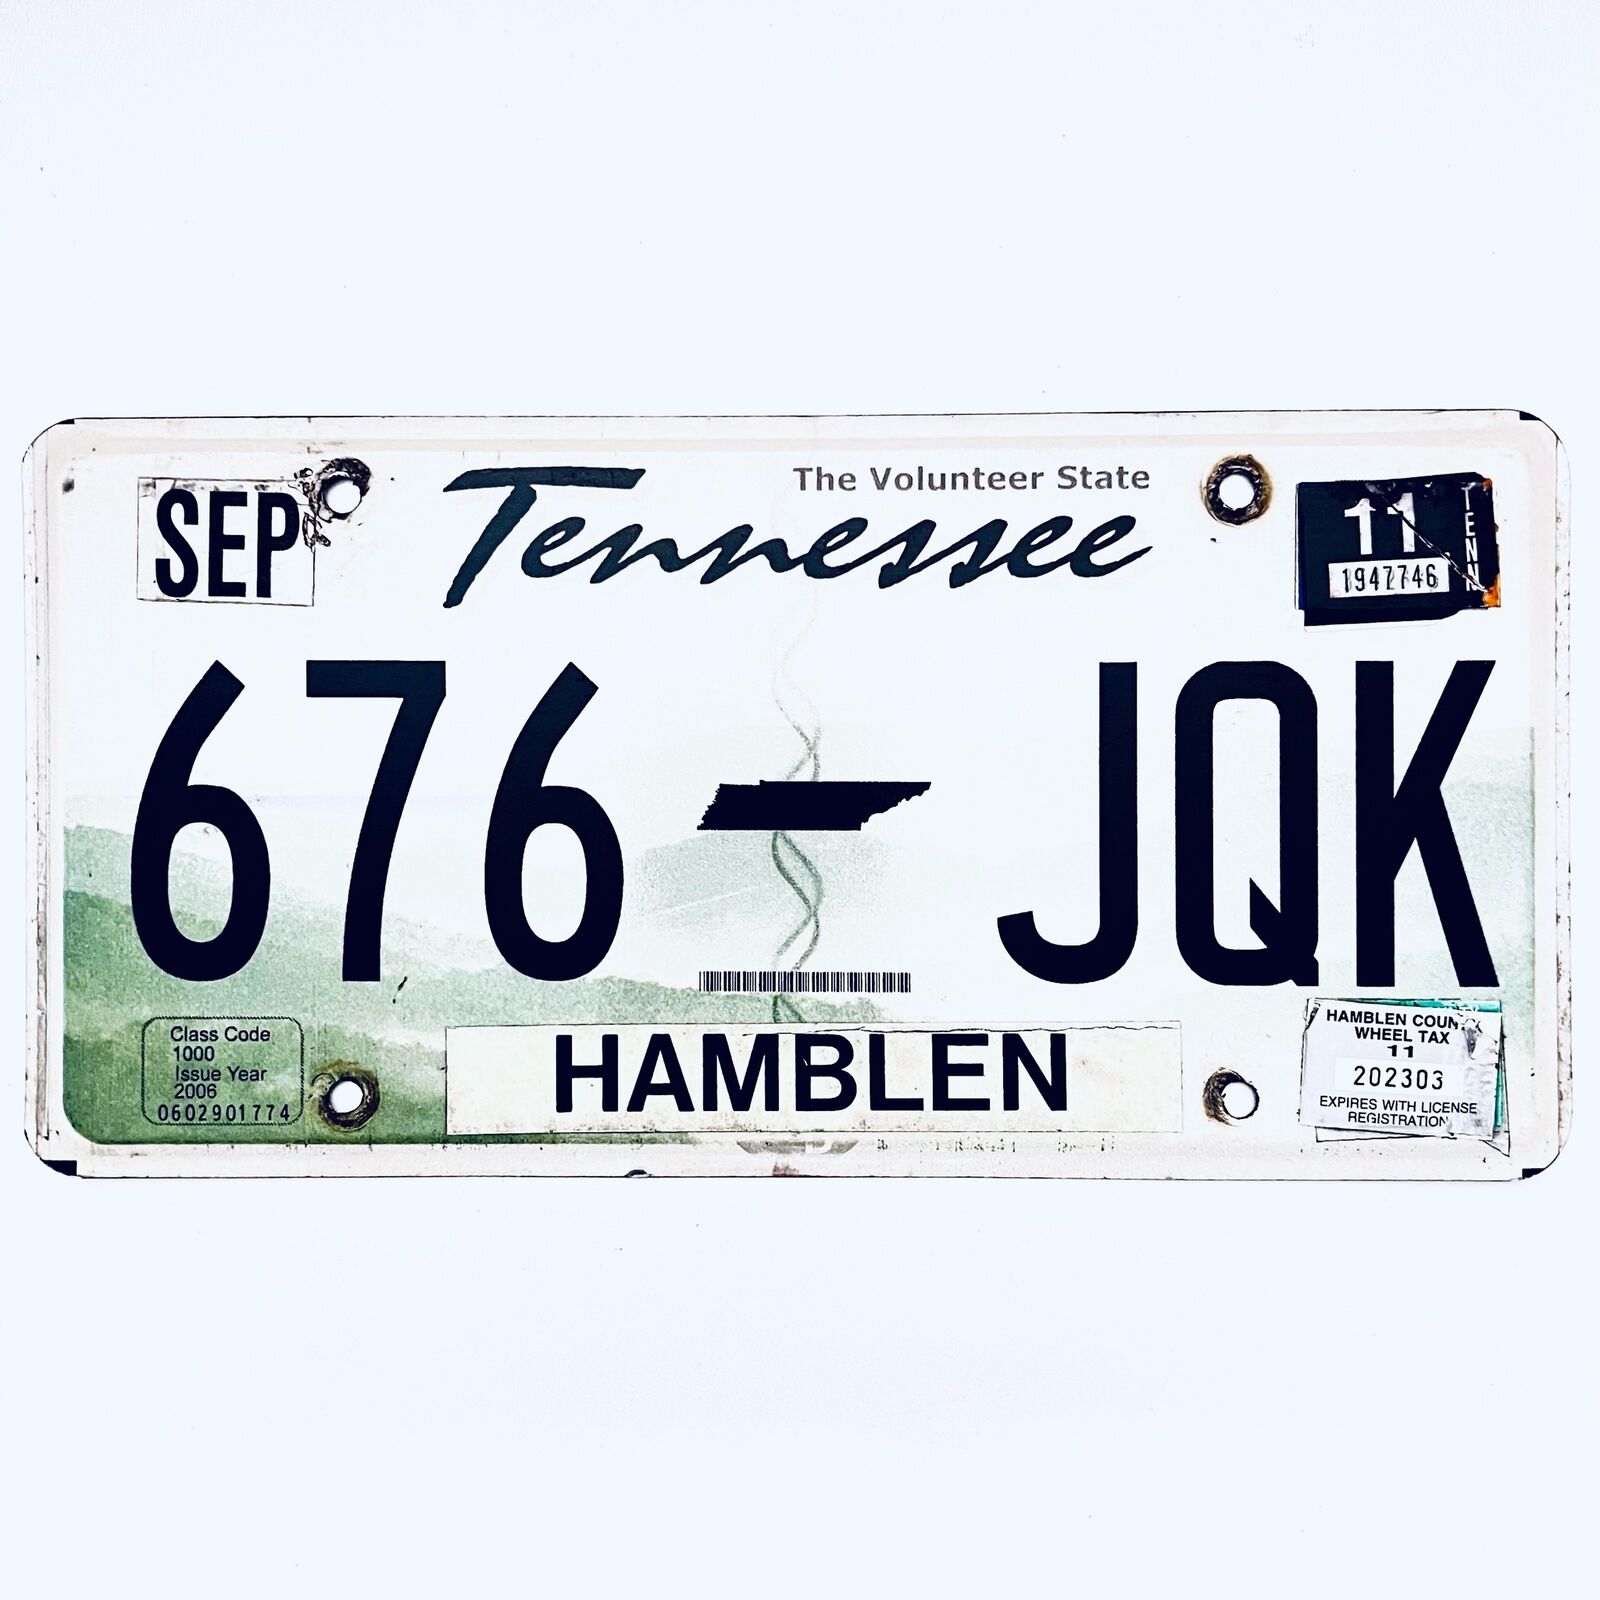 2011 United States Tennessee Hamblen County Passenger License Plate 676 JQK